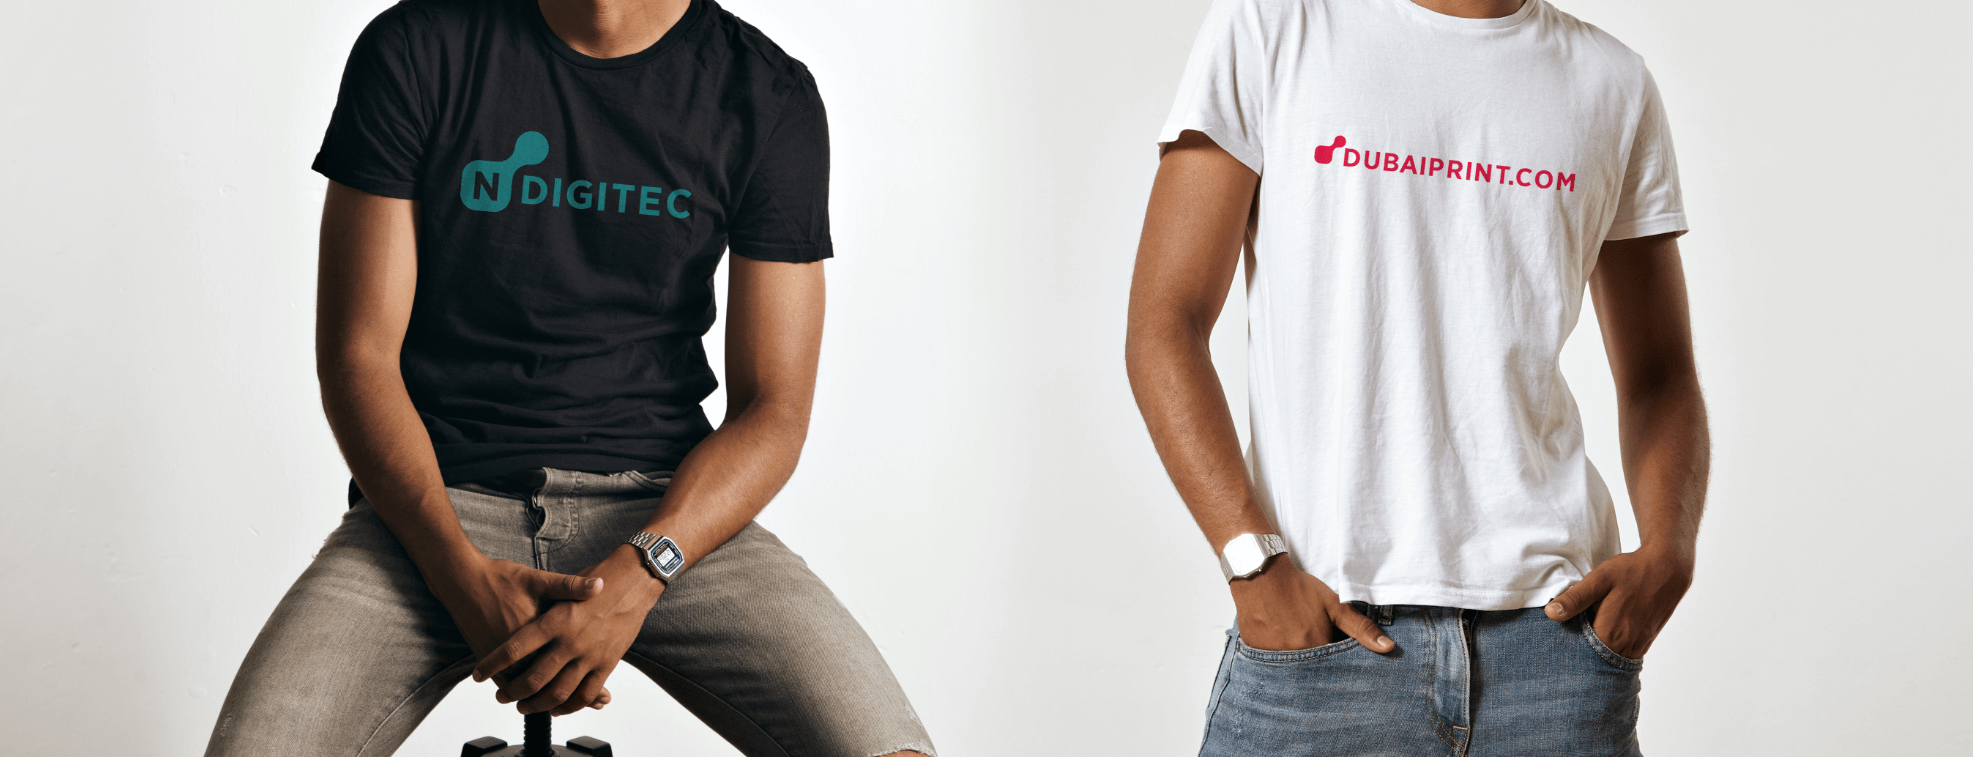 Custom-made made promotional t-shirts for Dubaiprint and NDigitec